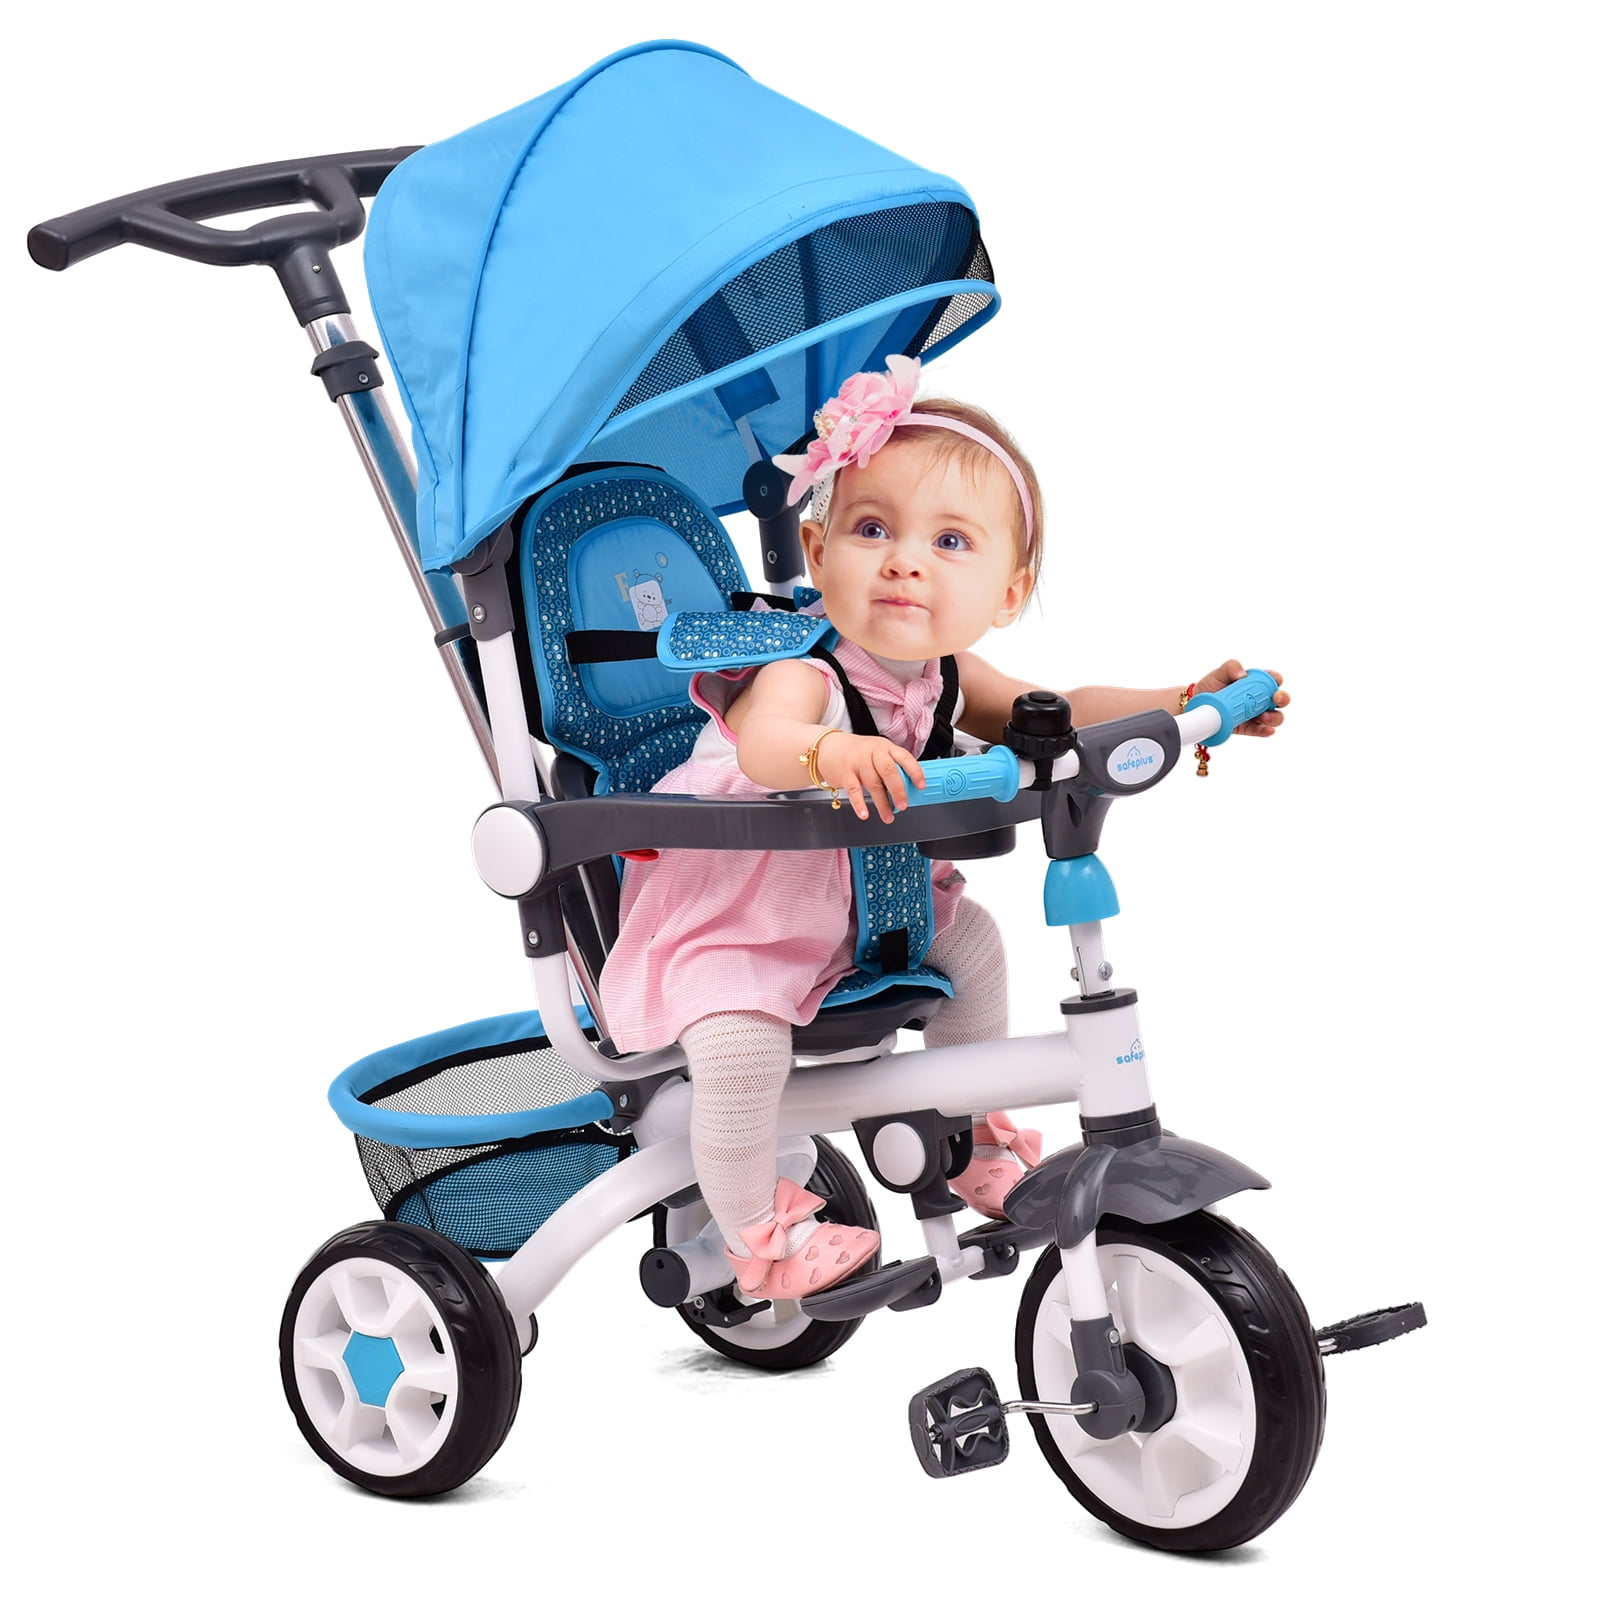 Сидячая коляска для детей. Kid Baby Tricycle 6 in 1 Stroller Bicycle. Велосипед коляска NW-slc255. Велосипед коляска 6170. Tricycle Baby Stroller.